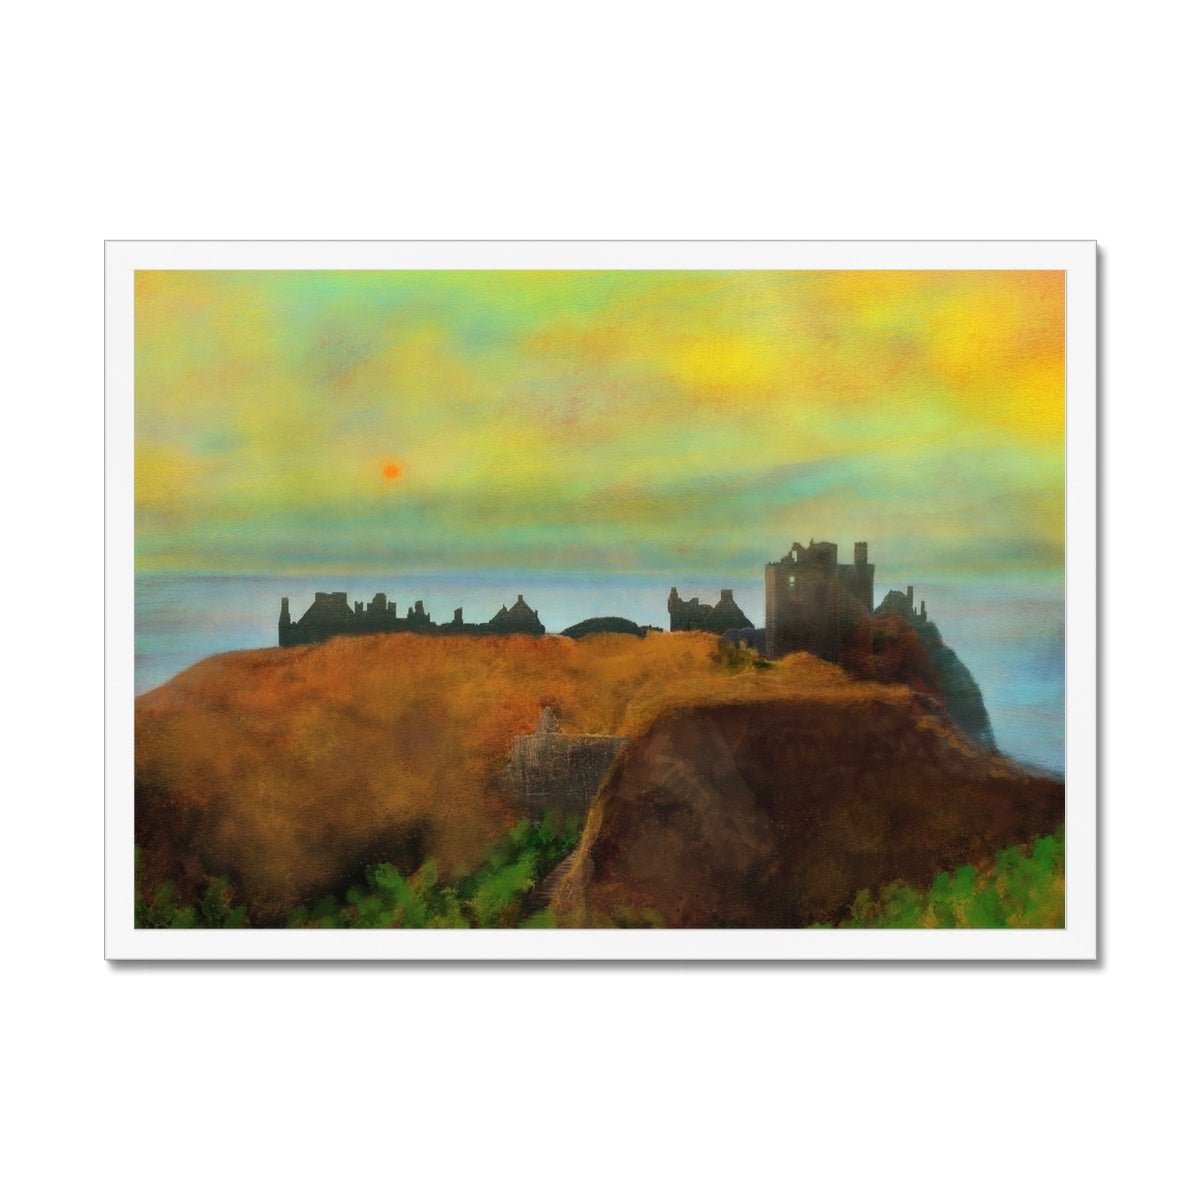 Dunnottar Castle Dusk Painting | Framed Prints From Scotland-Framed Prints-Scottish Castles Art Gallery-A2 Landscape-White Frame-Paintings, Prints, Homeware, Art Gifts From Scotland By Scottish Artist Kevin Hunter